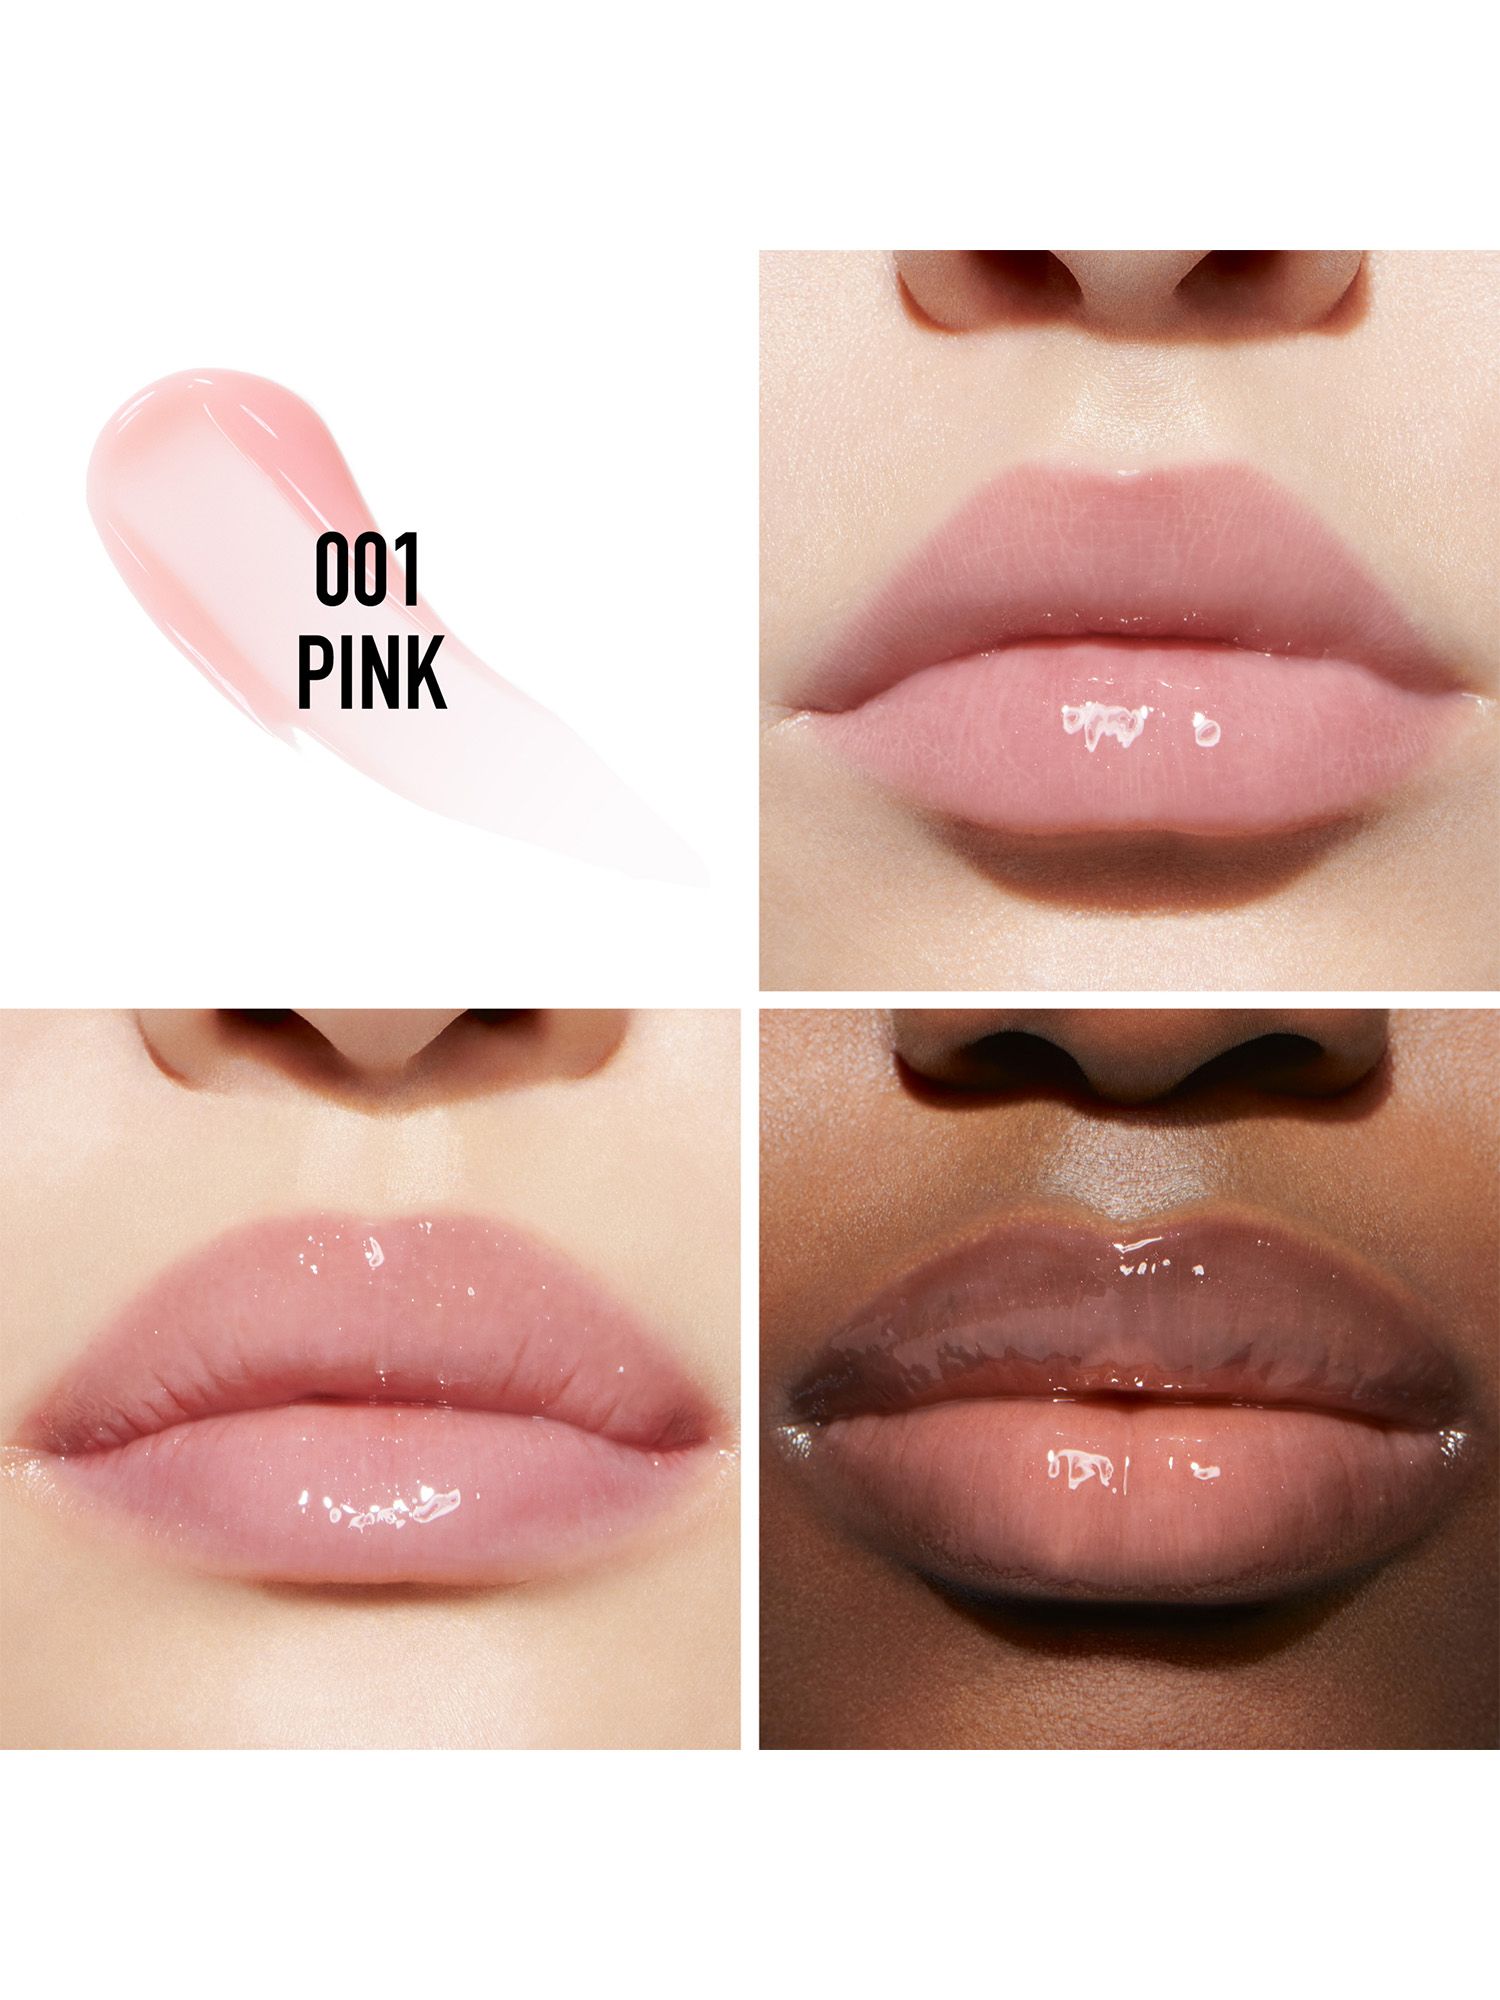 dior 001 lip gloss, OFF 76%,Buy!